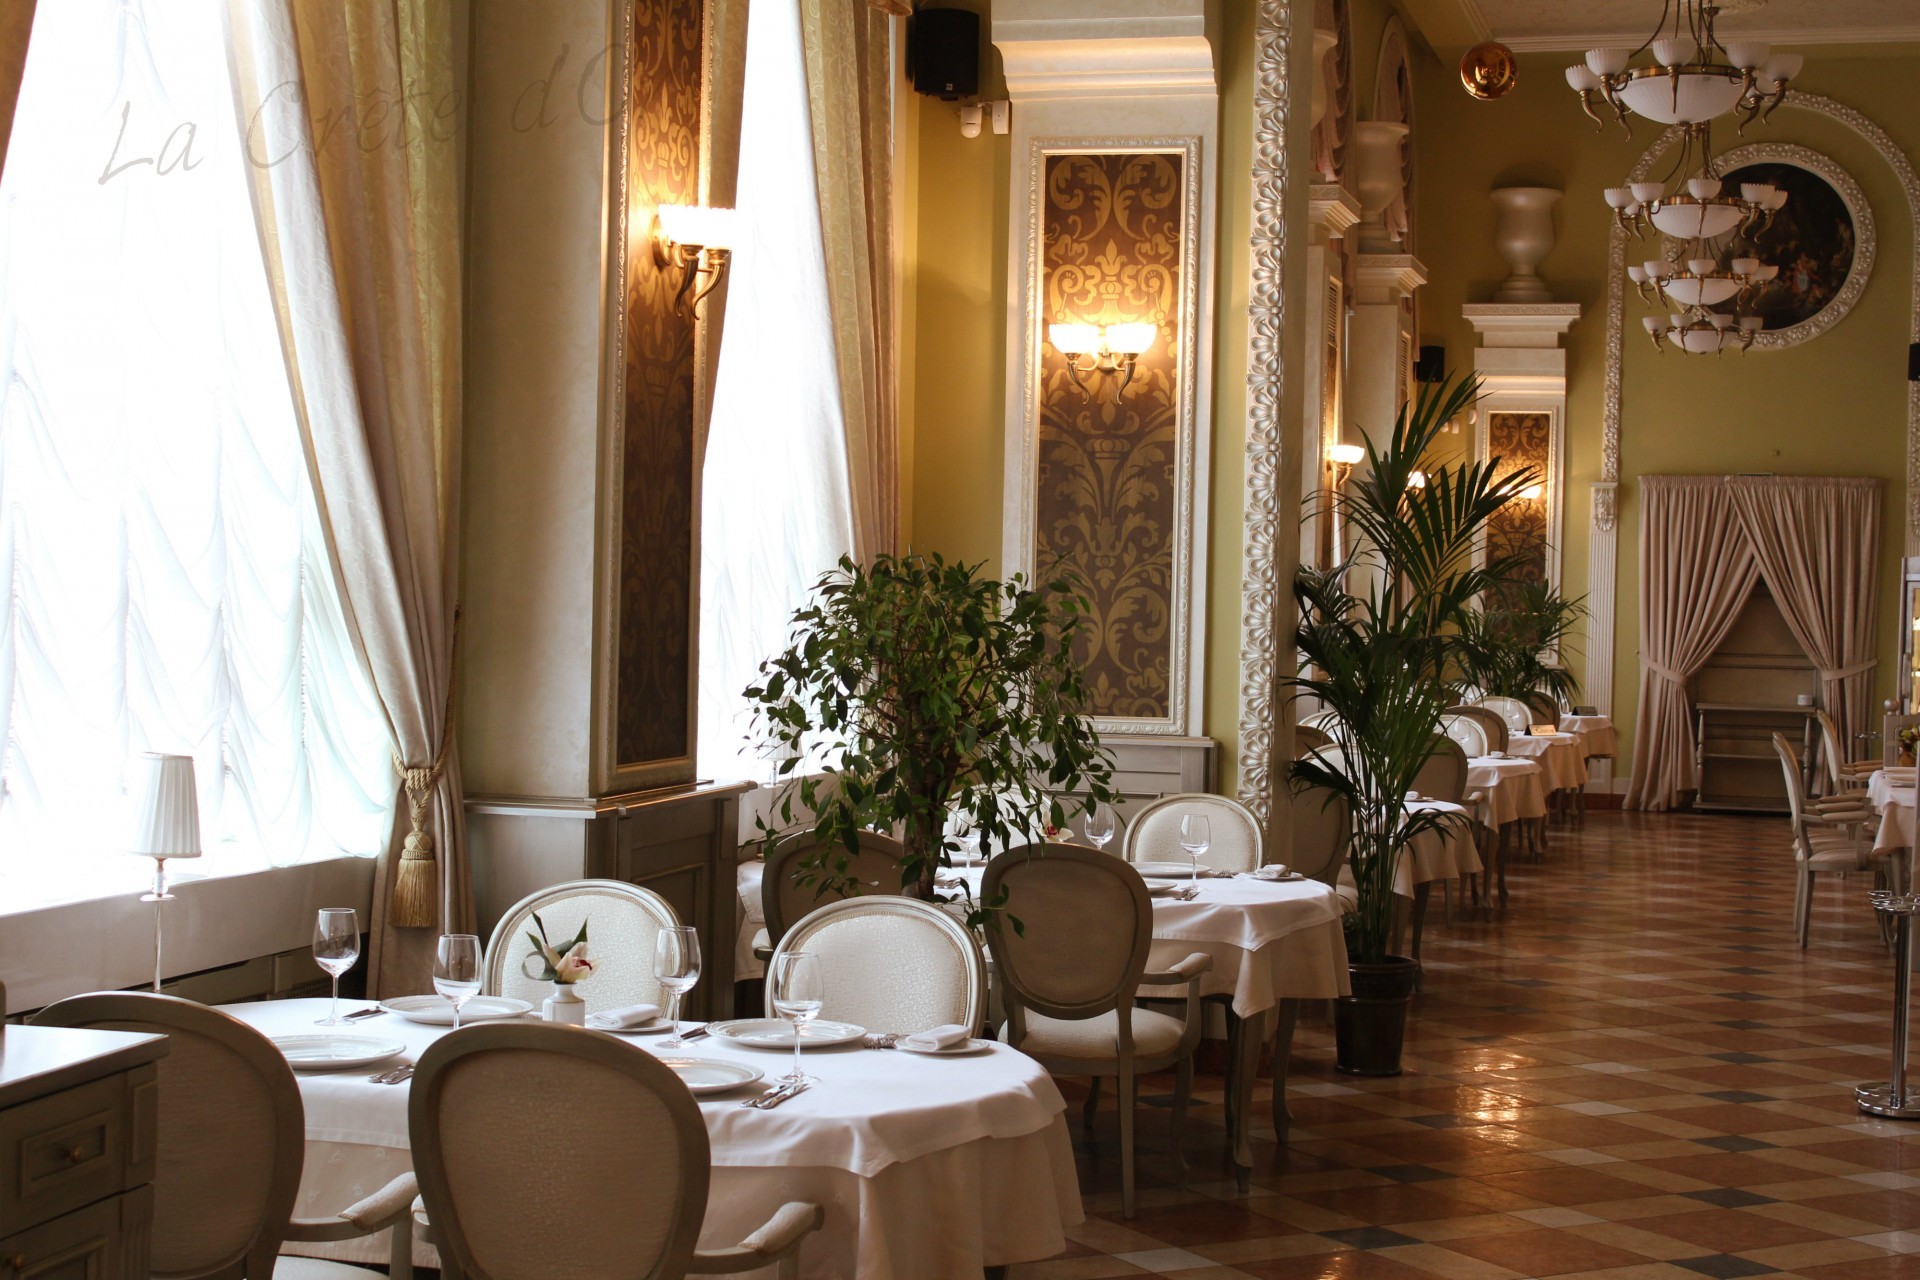  Ресторан и кофейня «La Crête D’Or (Золотой гребешок)» в г. Минске, фото 1